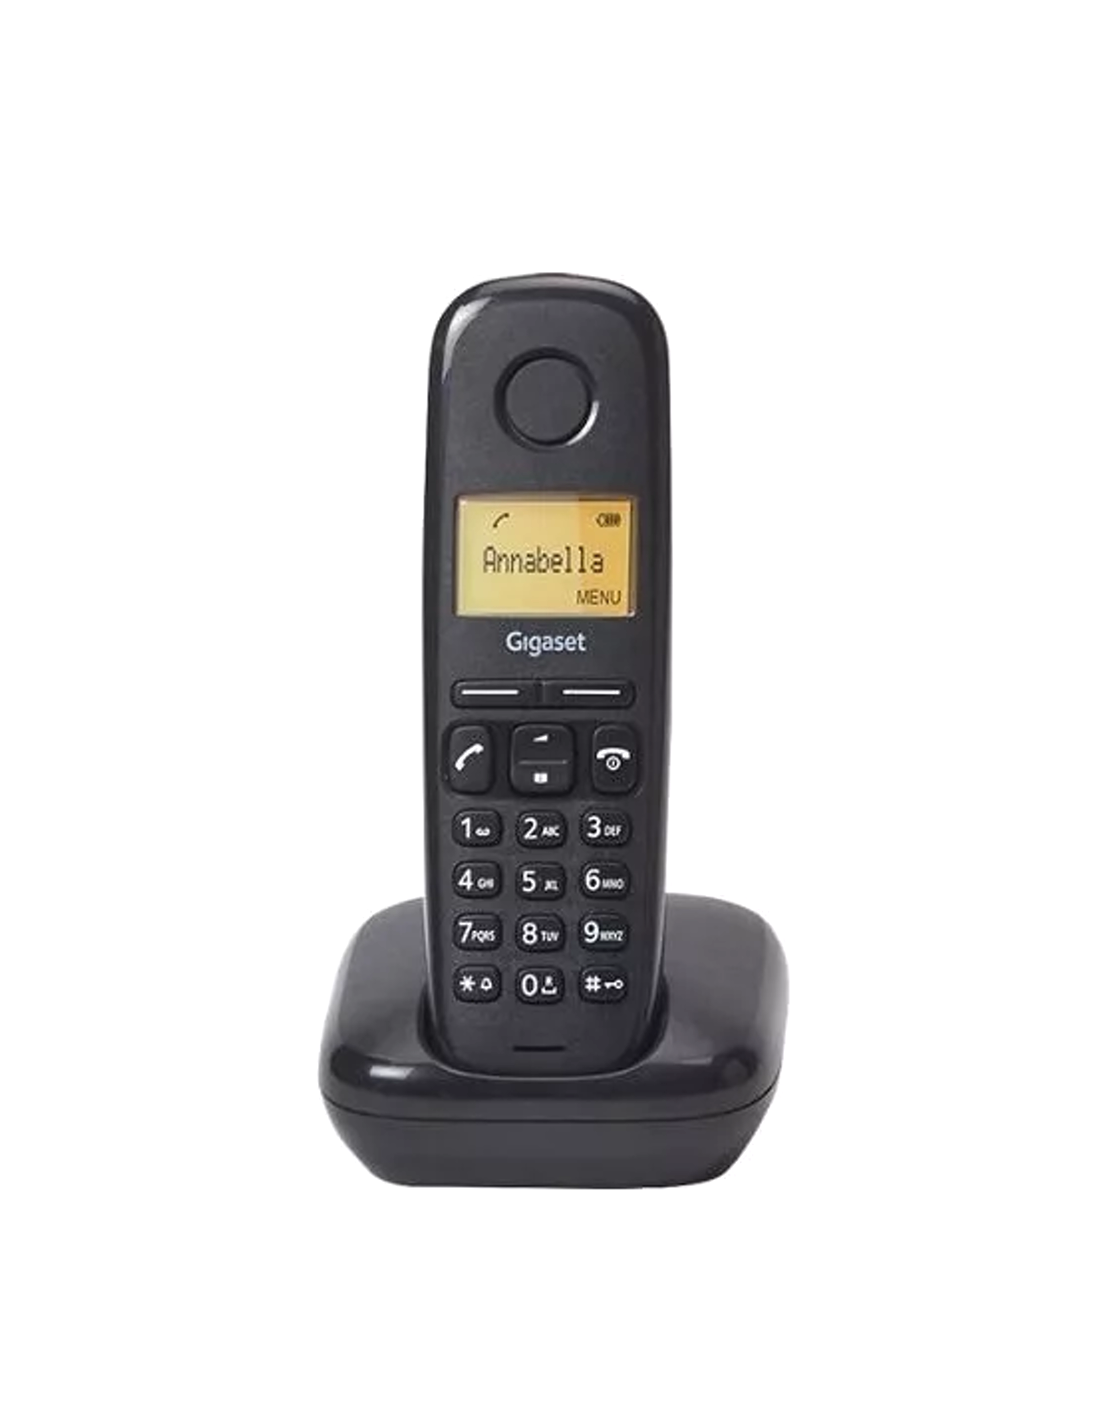 TELEFONO INALAMBRICO MOTOROLA M700 CON ID LLAMADAS Motorola M700